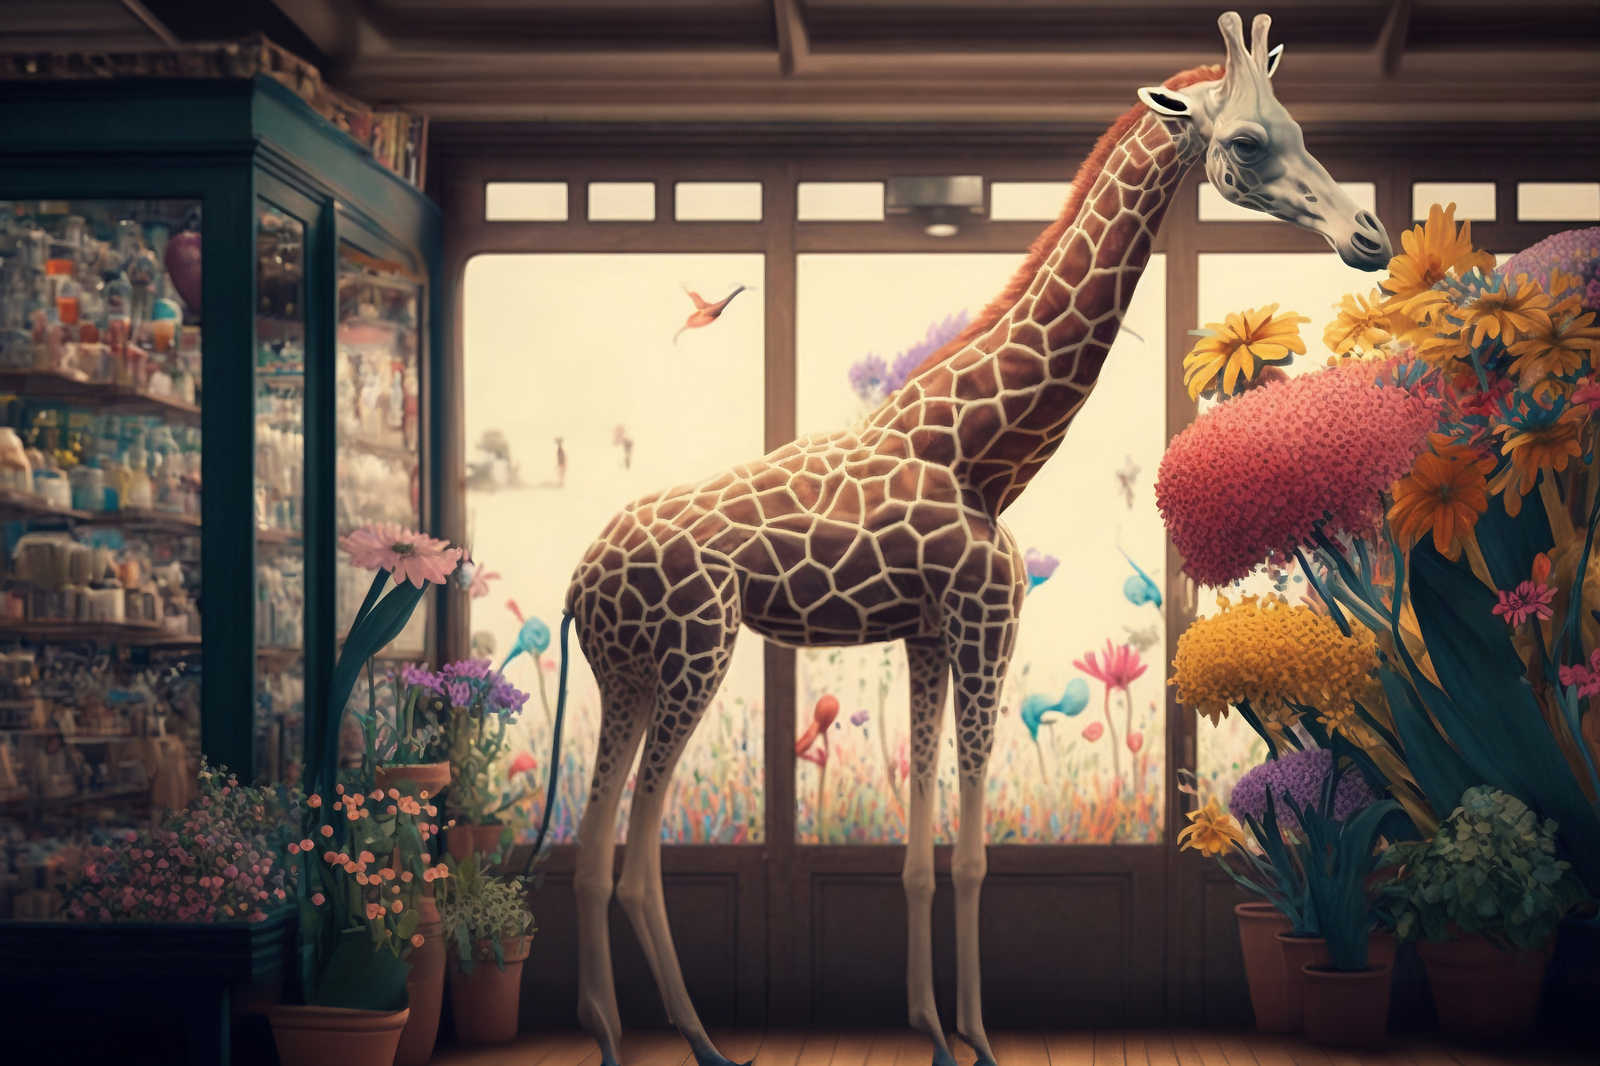             KI Canvas schilderij »bloem giraffe« - 120 cm x 80 cm
        